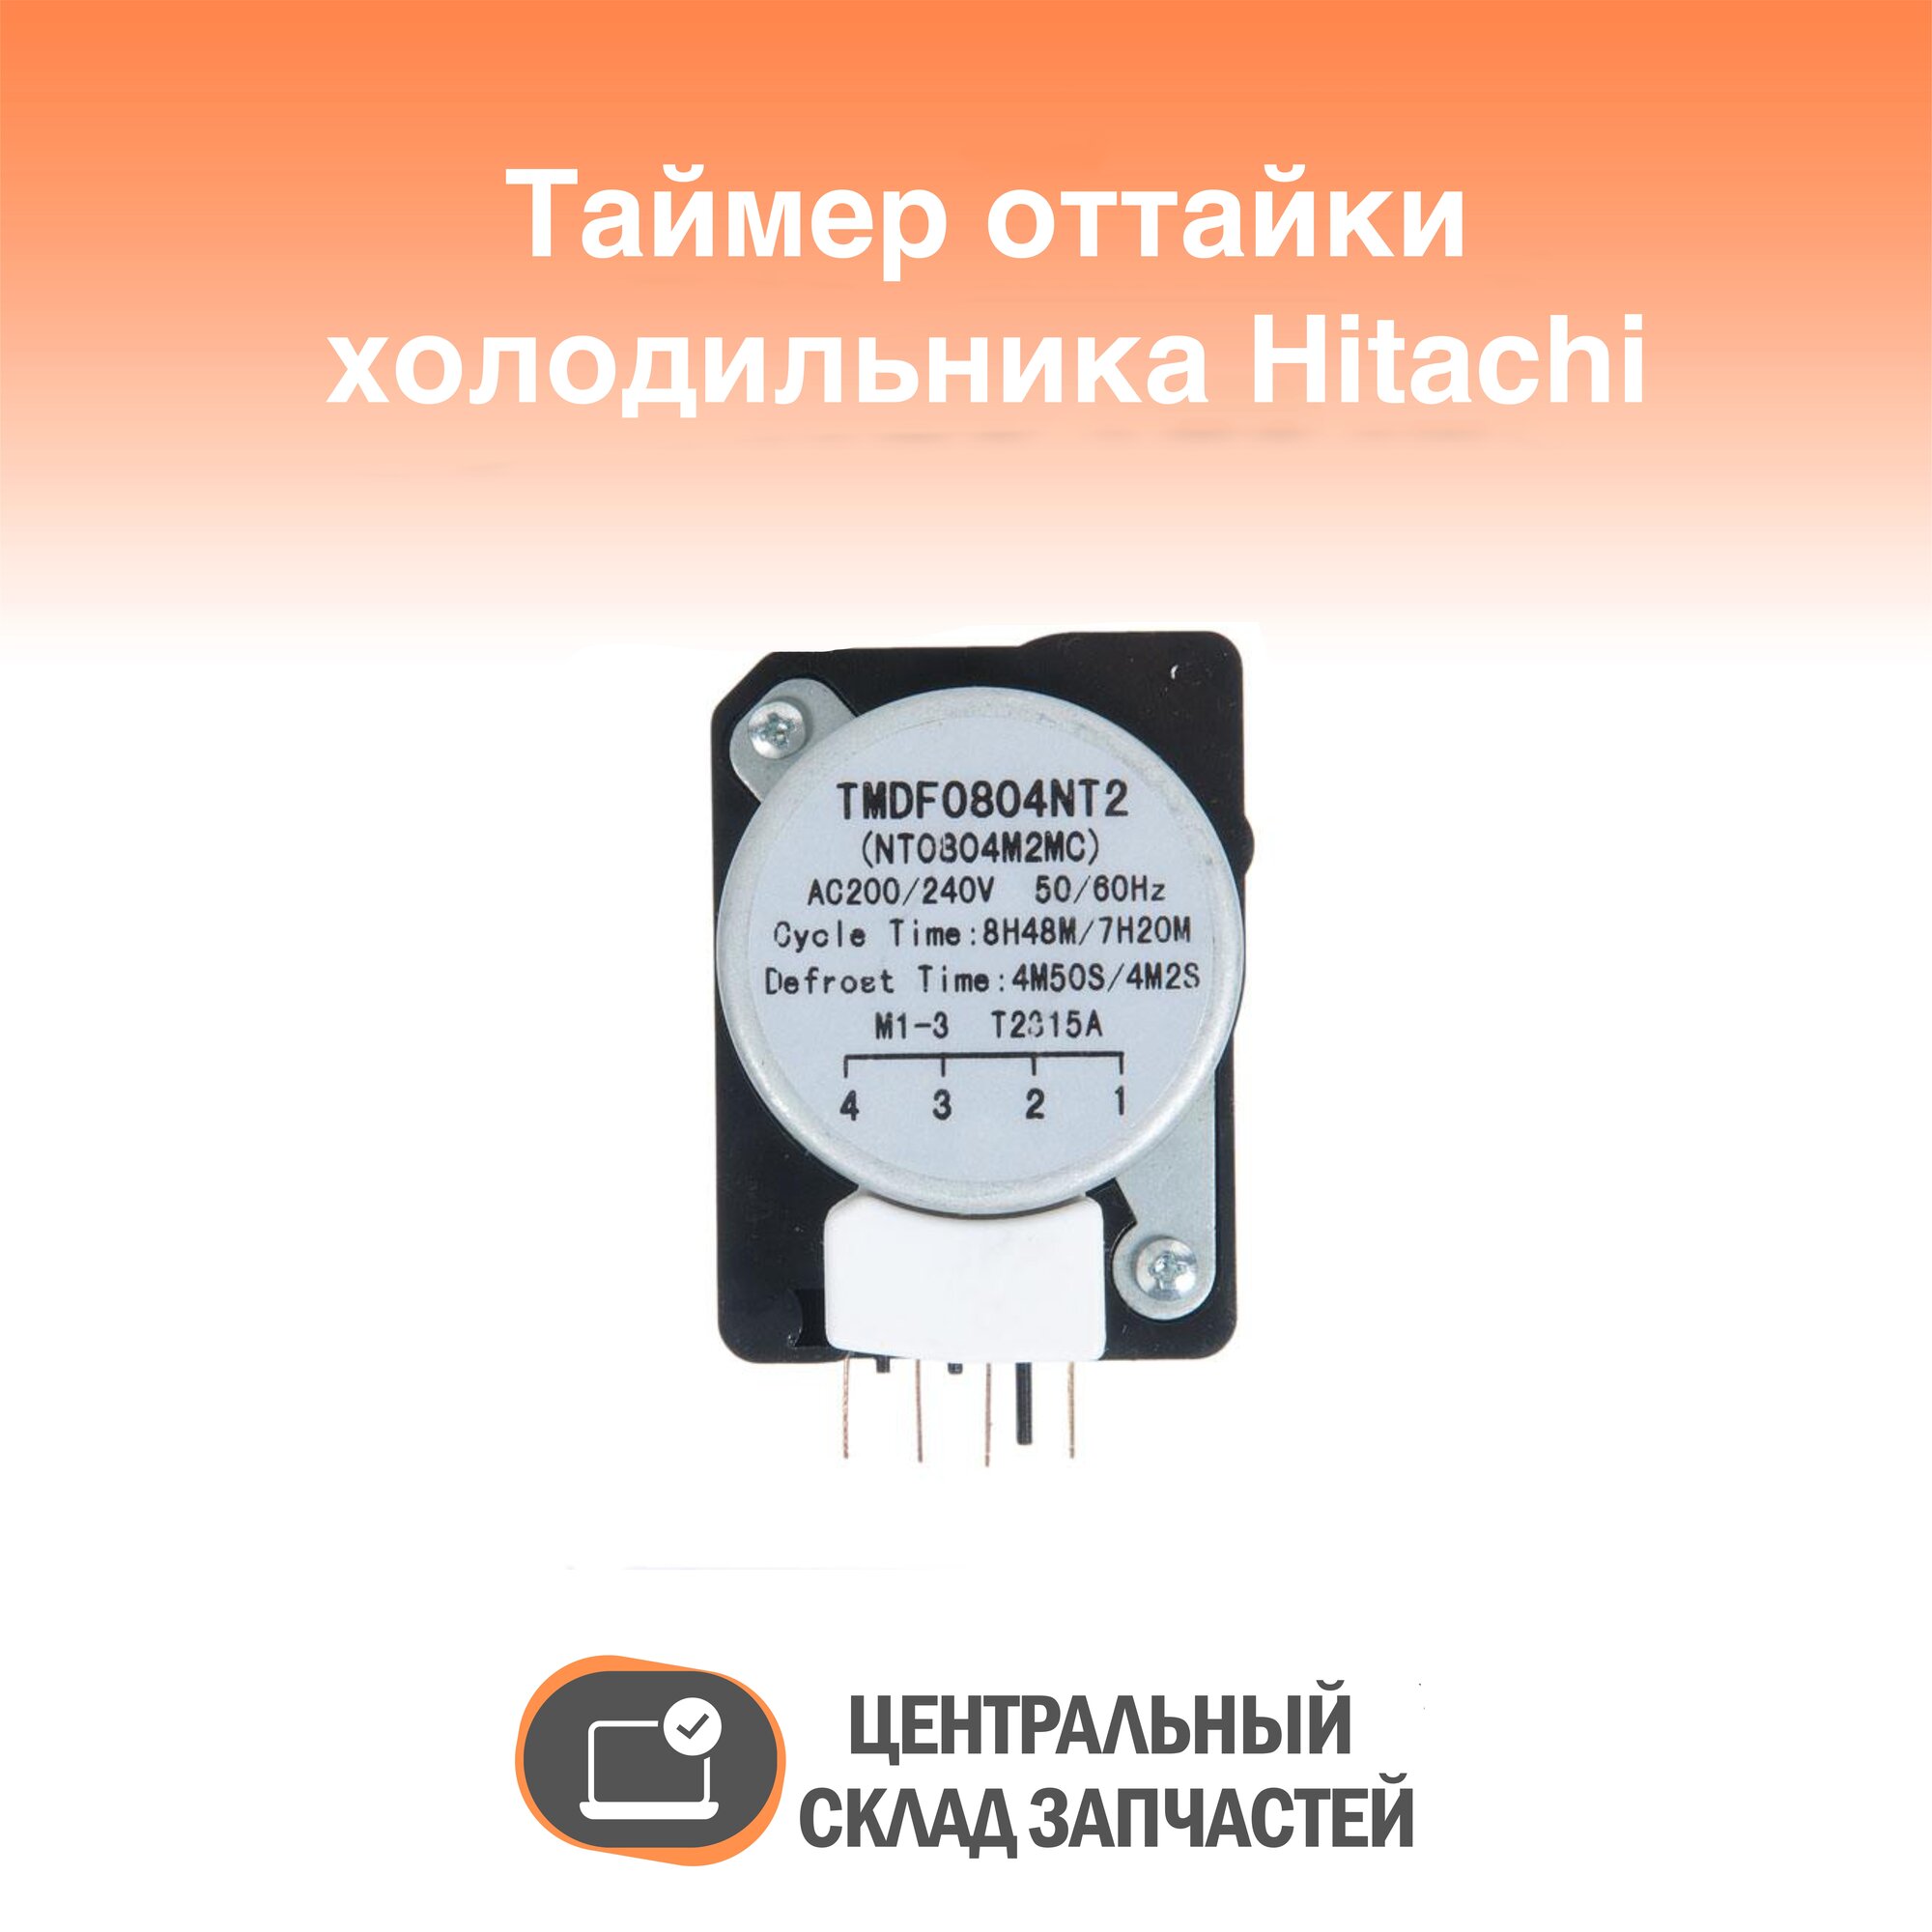 TMDF0804NT2 Таймер оттайки для холодильника Hitachi